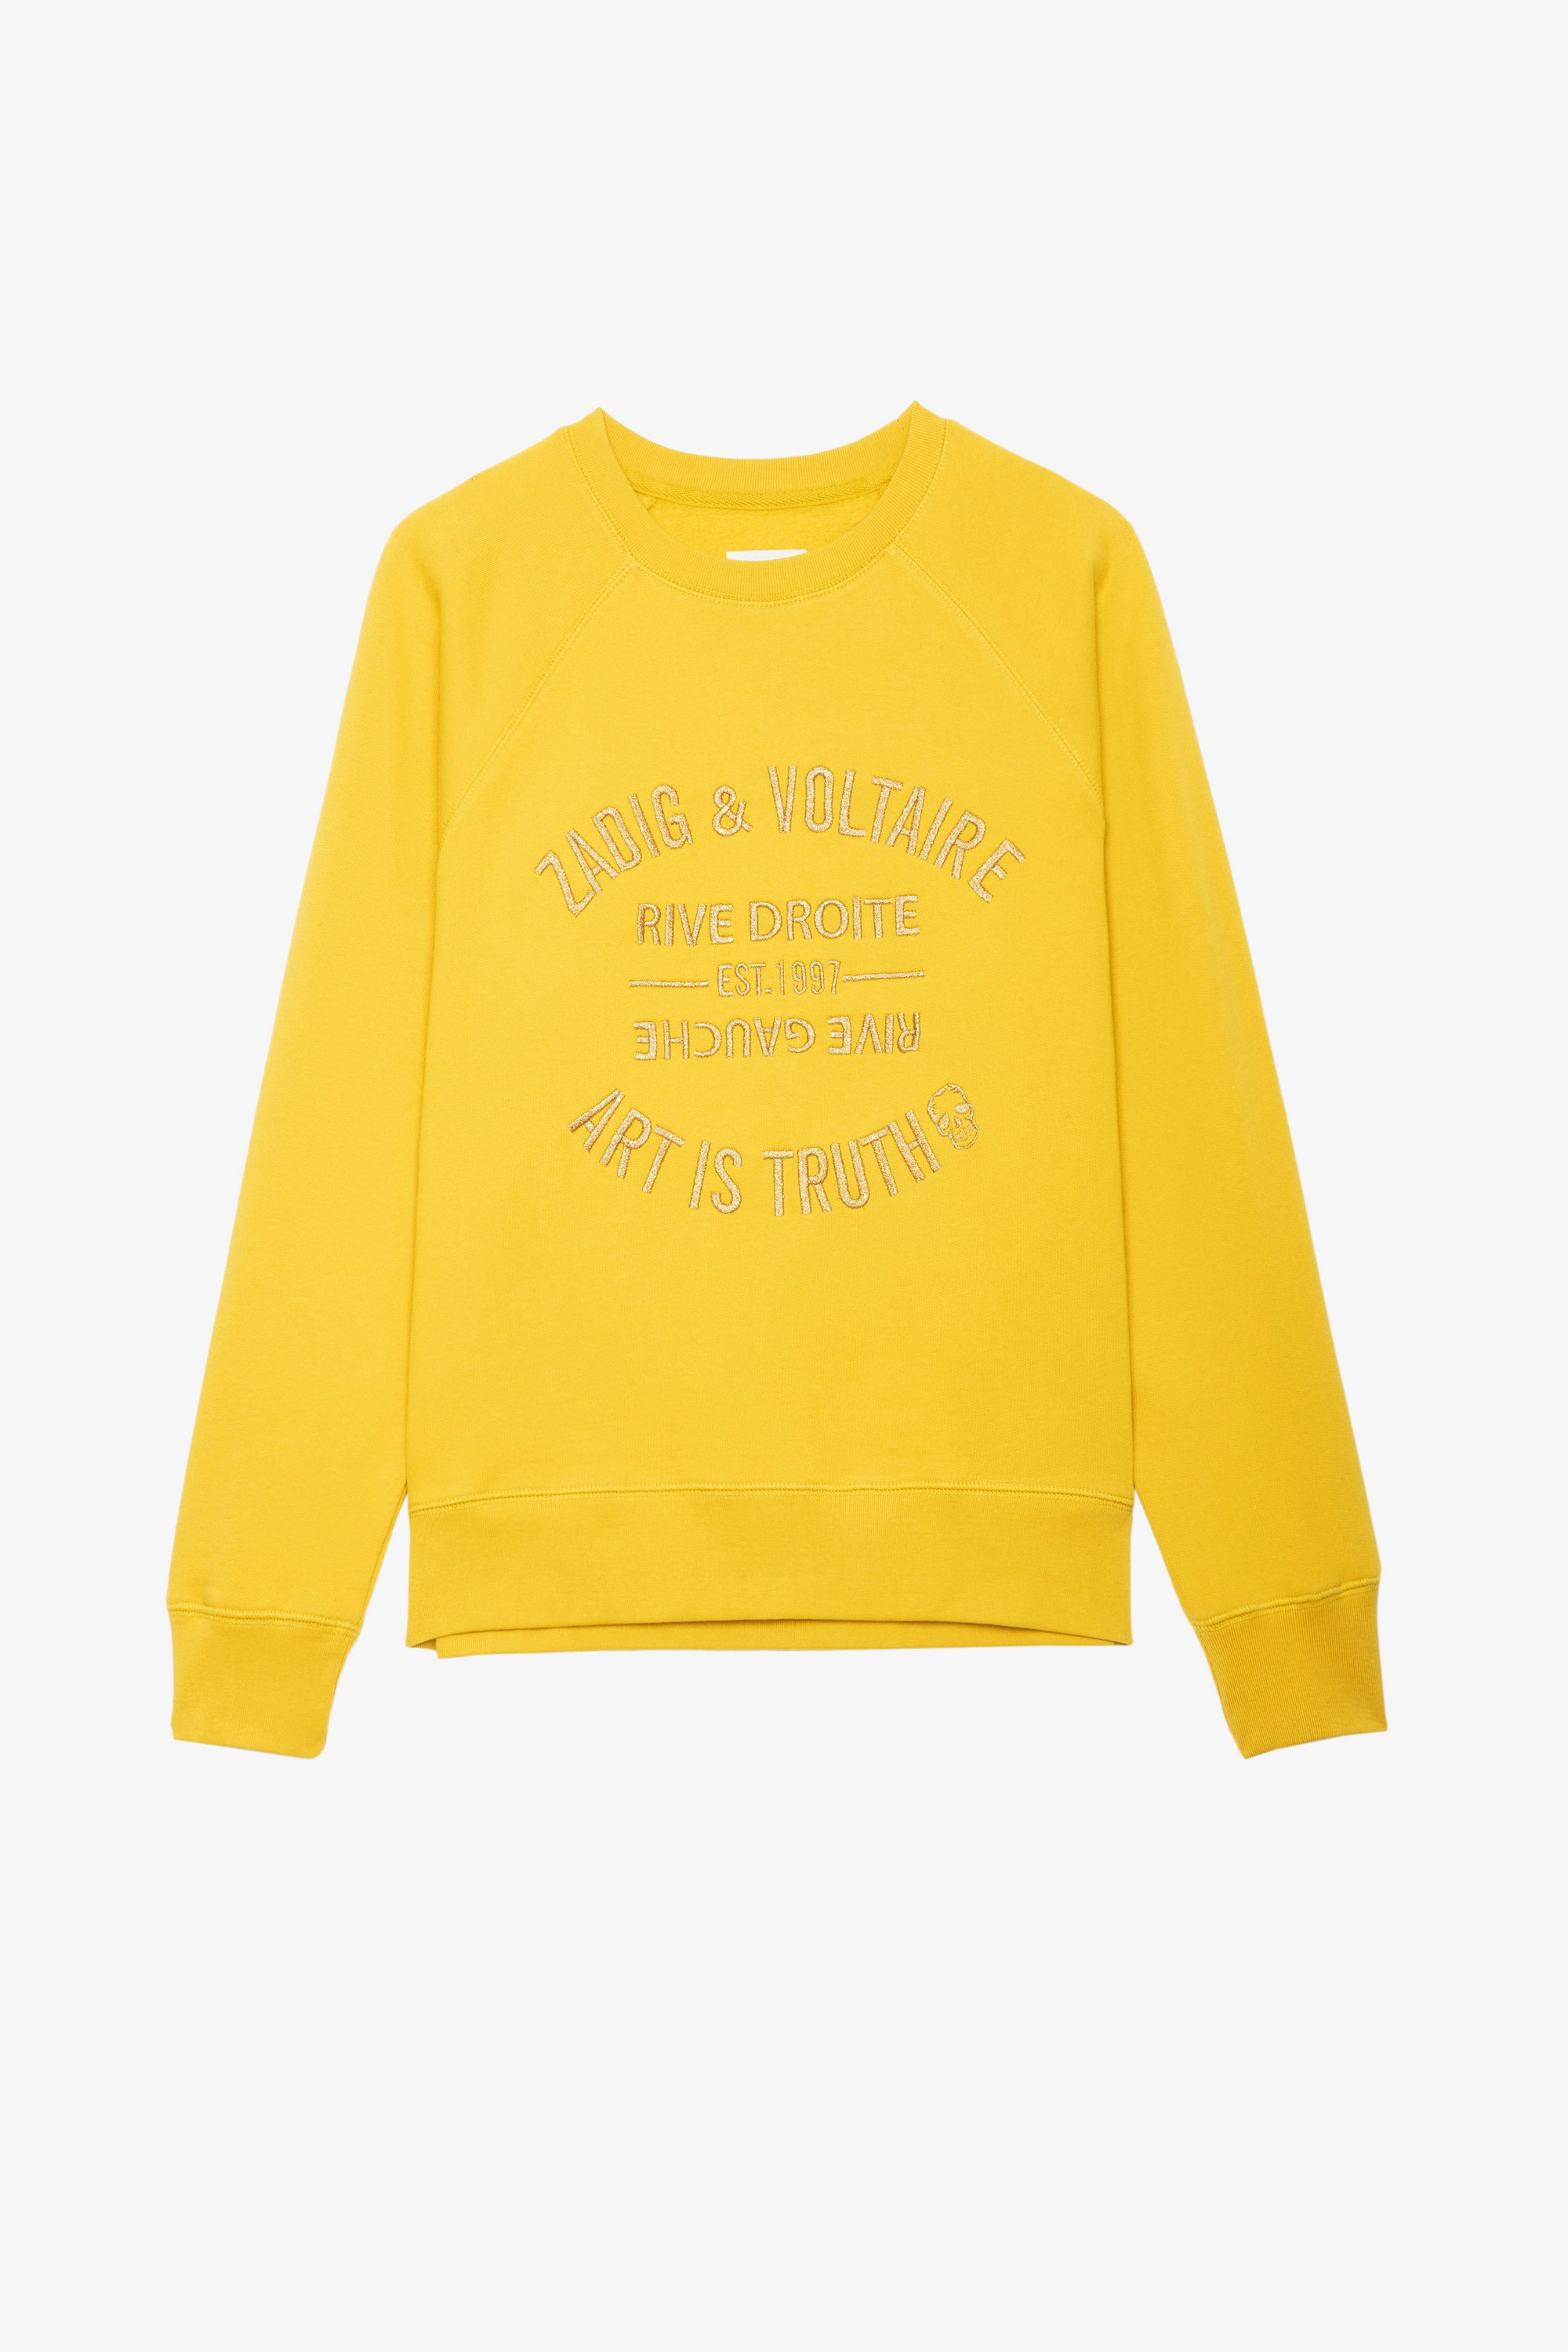 Sweatshirt Upper Blason Brodé Sweatshirt en coton jaune orné d'une broderie blason femme